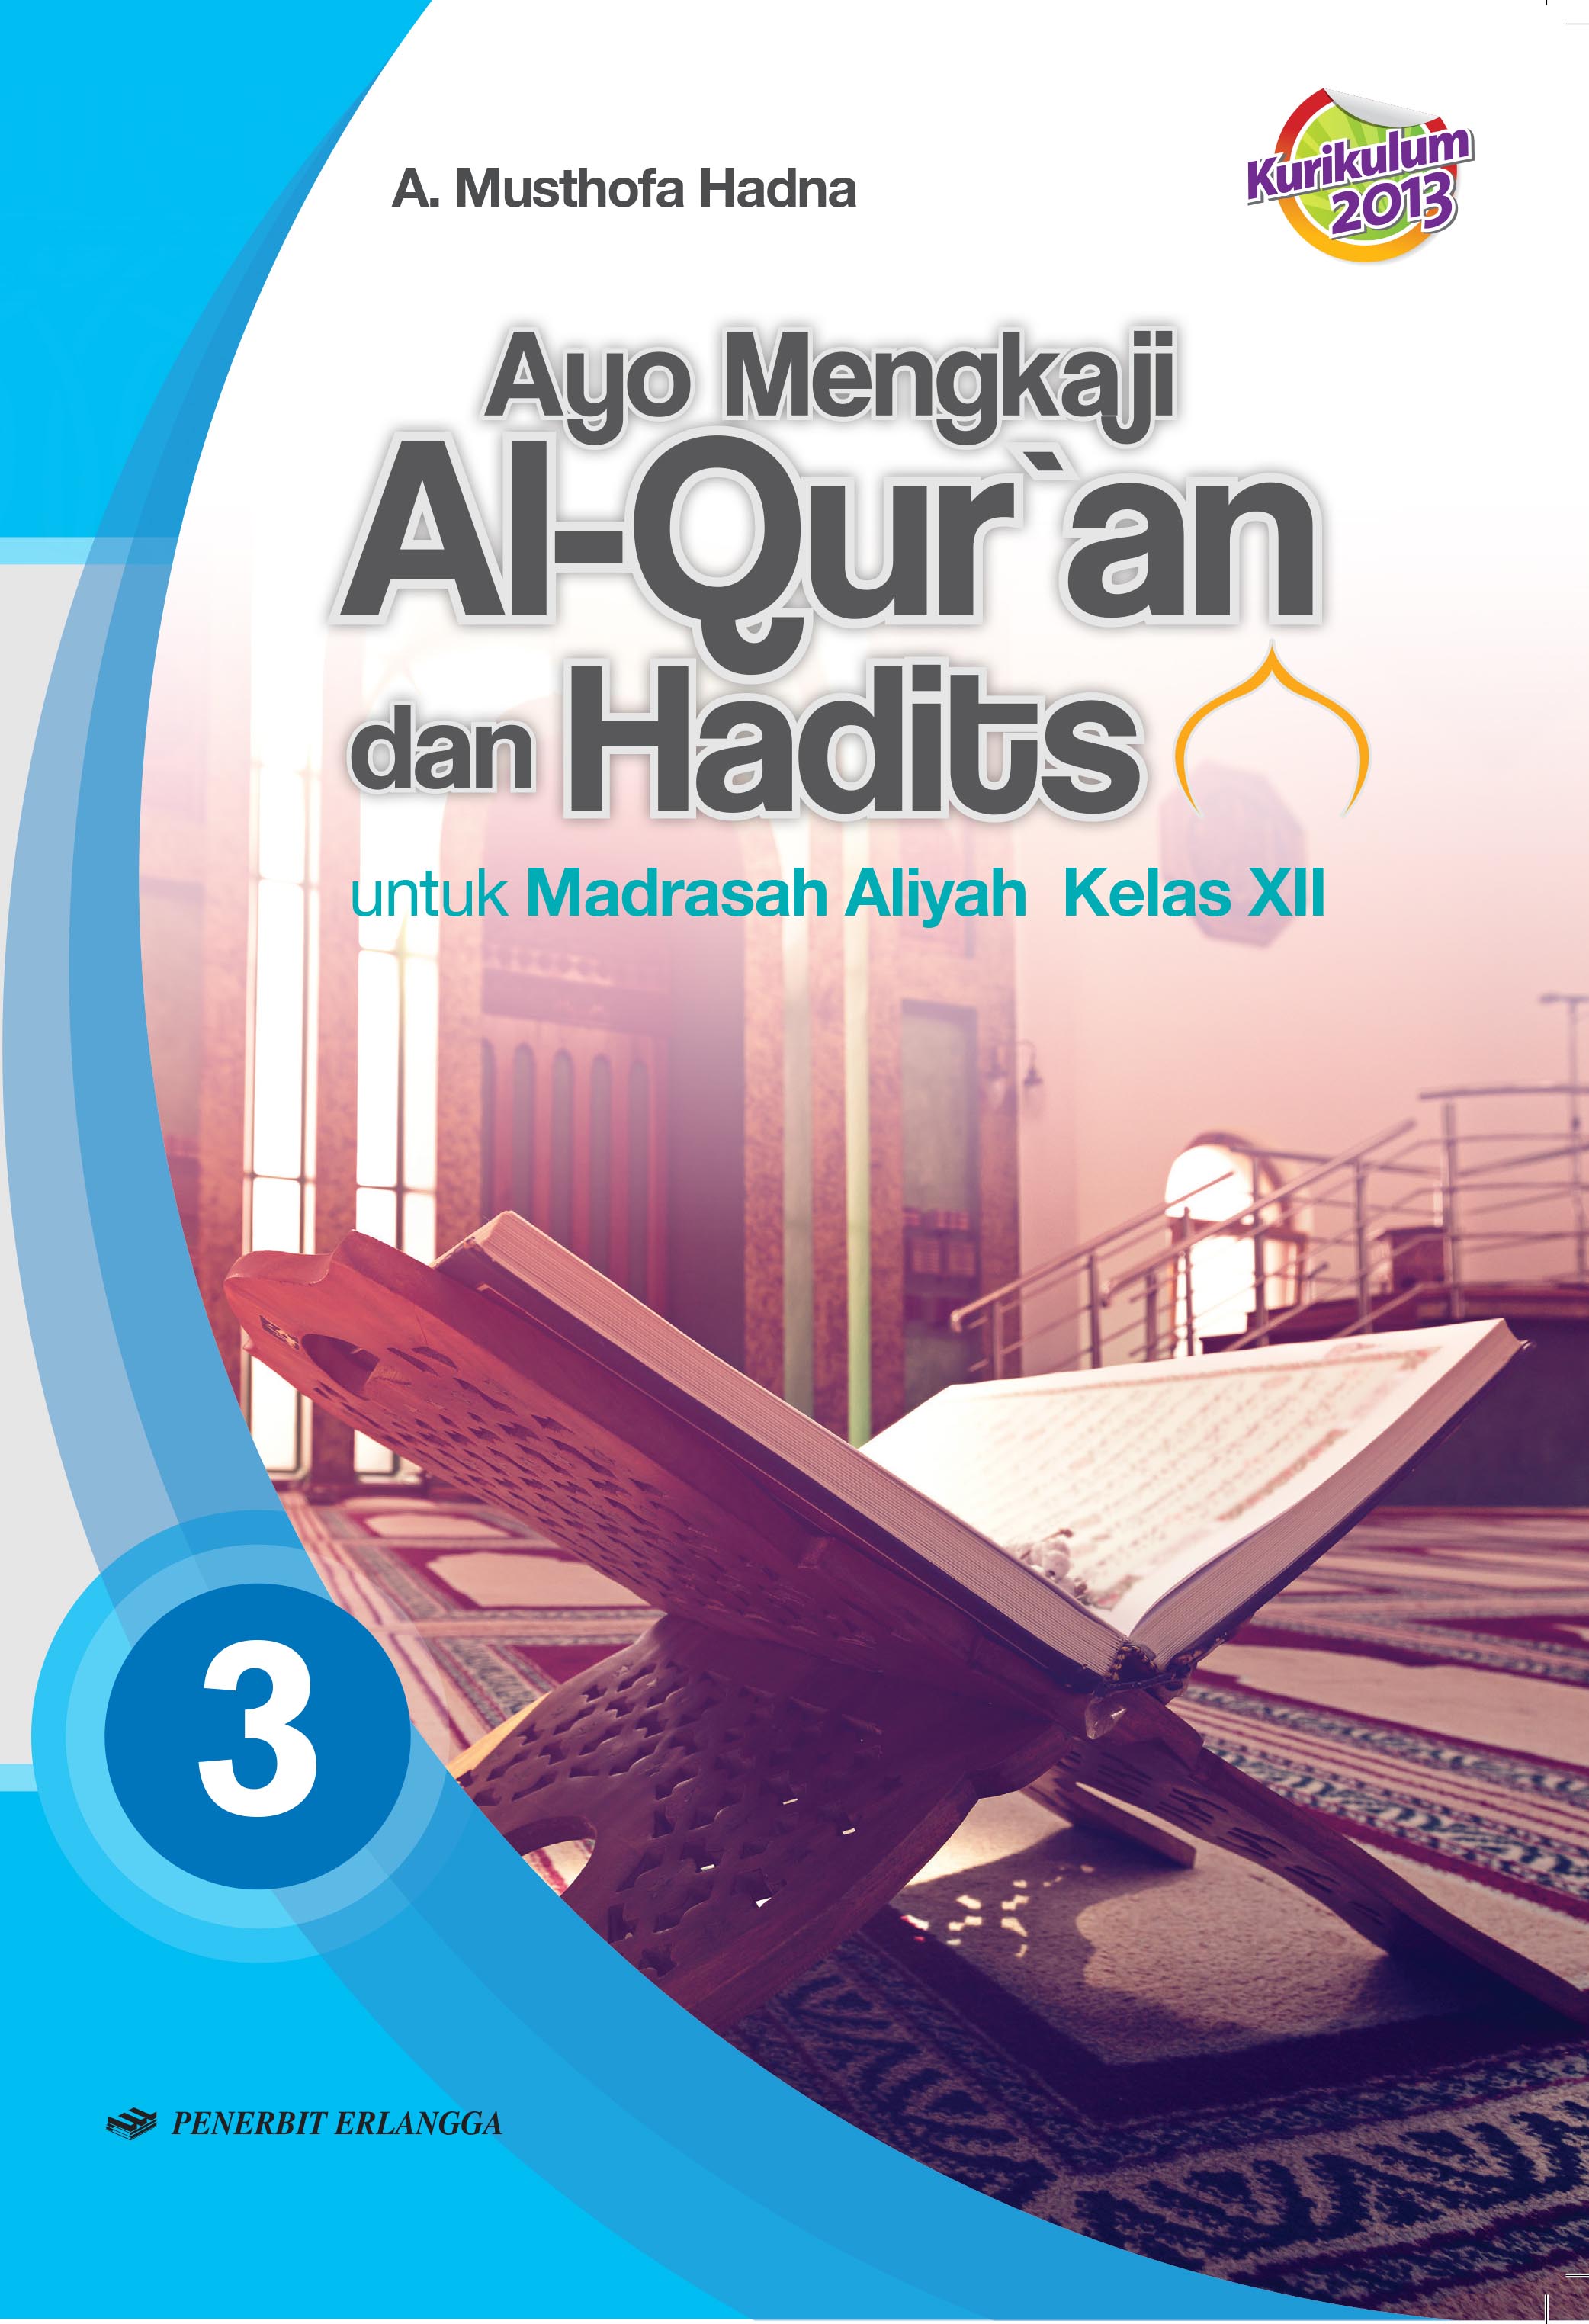 Buku Siswa Quran Hadits Kelas 12 Kurikulum 2013